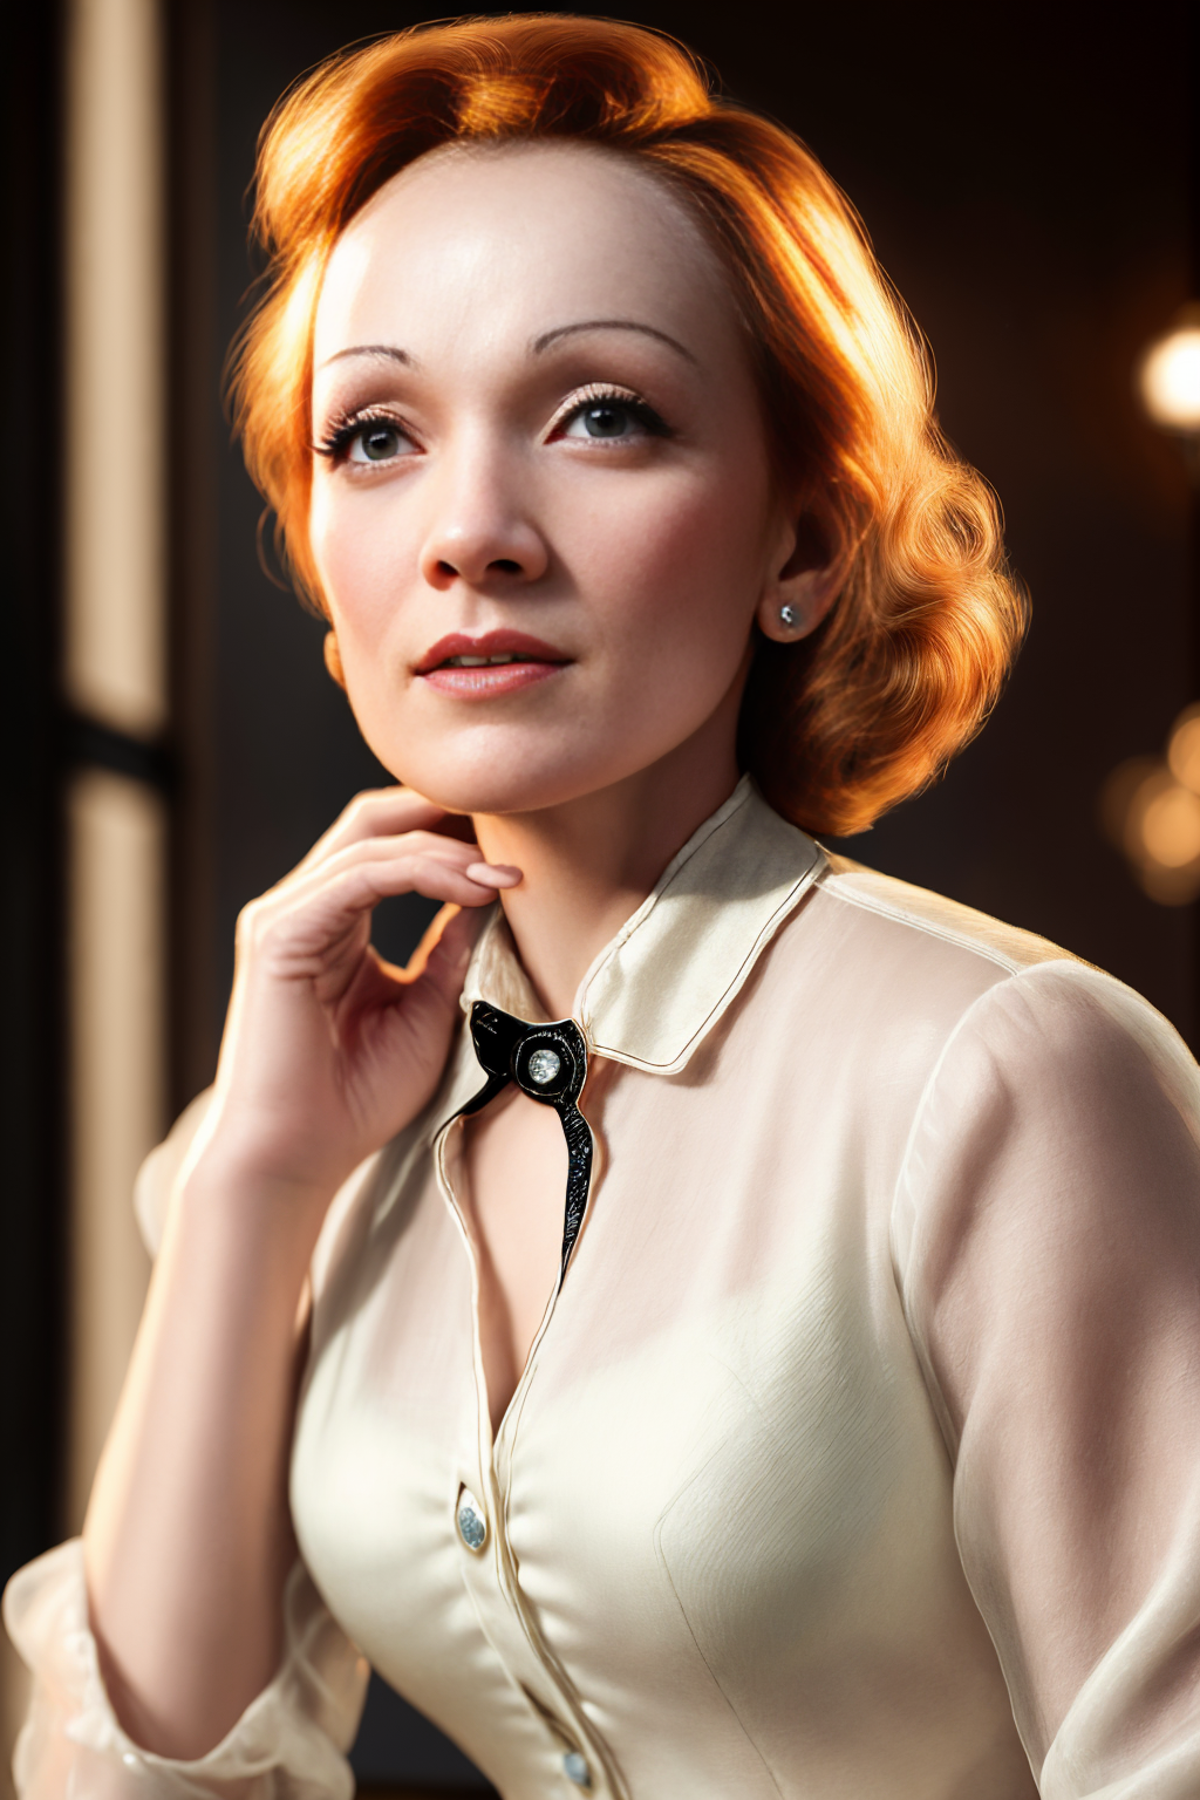 Marlene Dietrich image by Wiggin